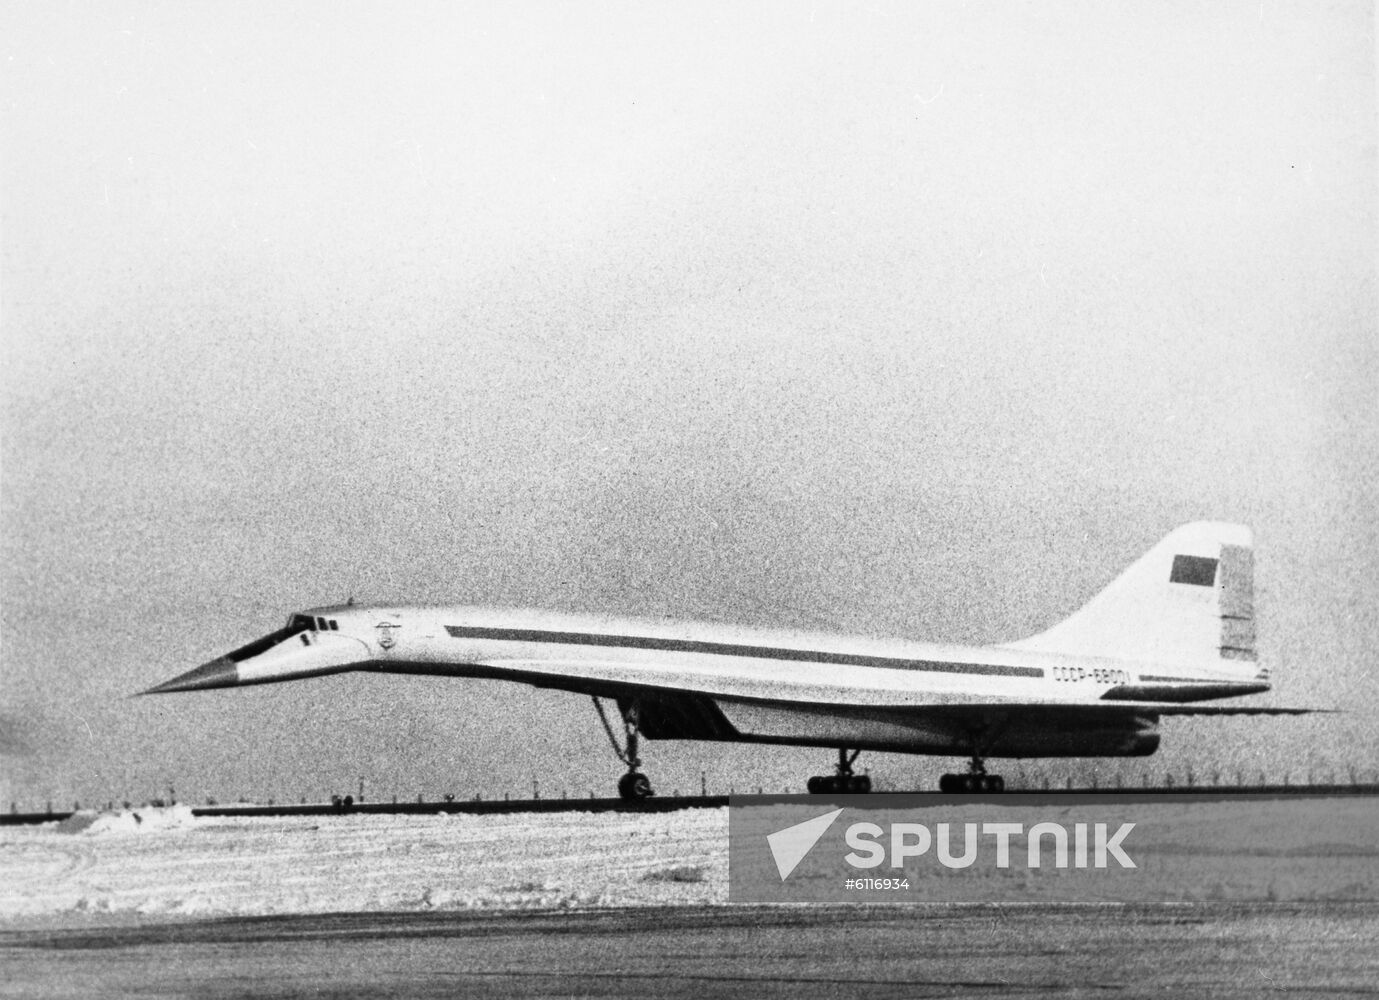 Tupolev Tu-334 supersonic transport